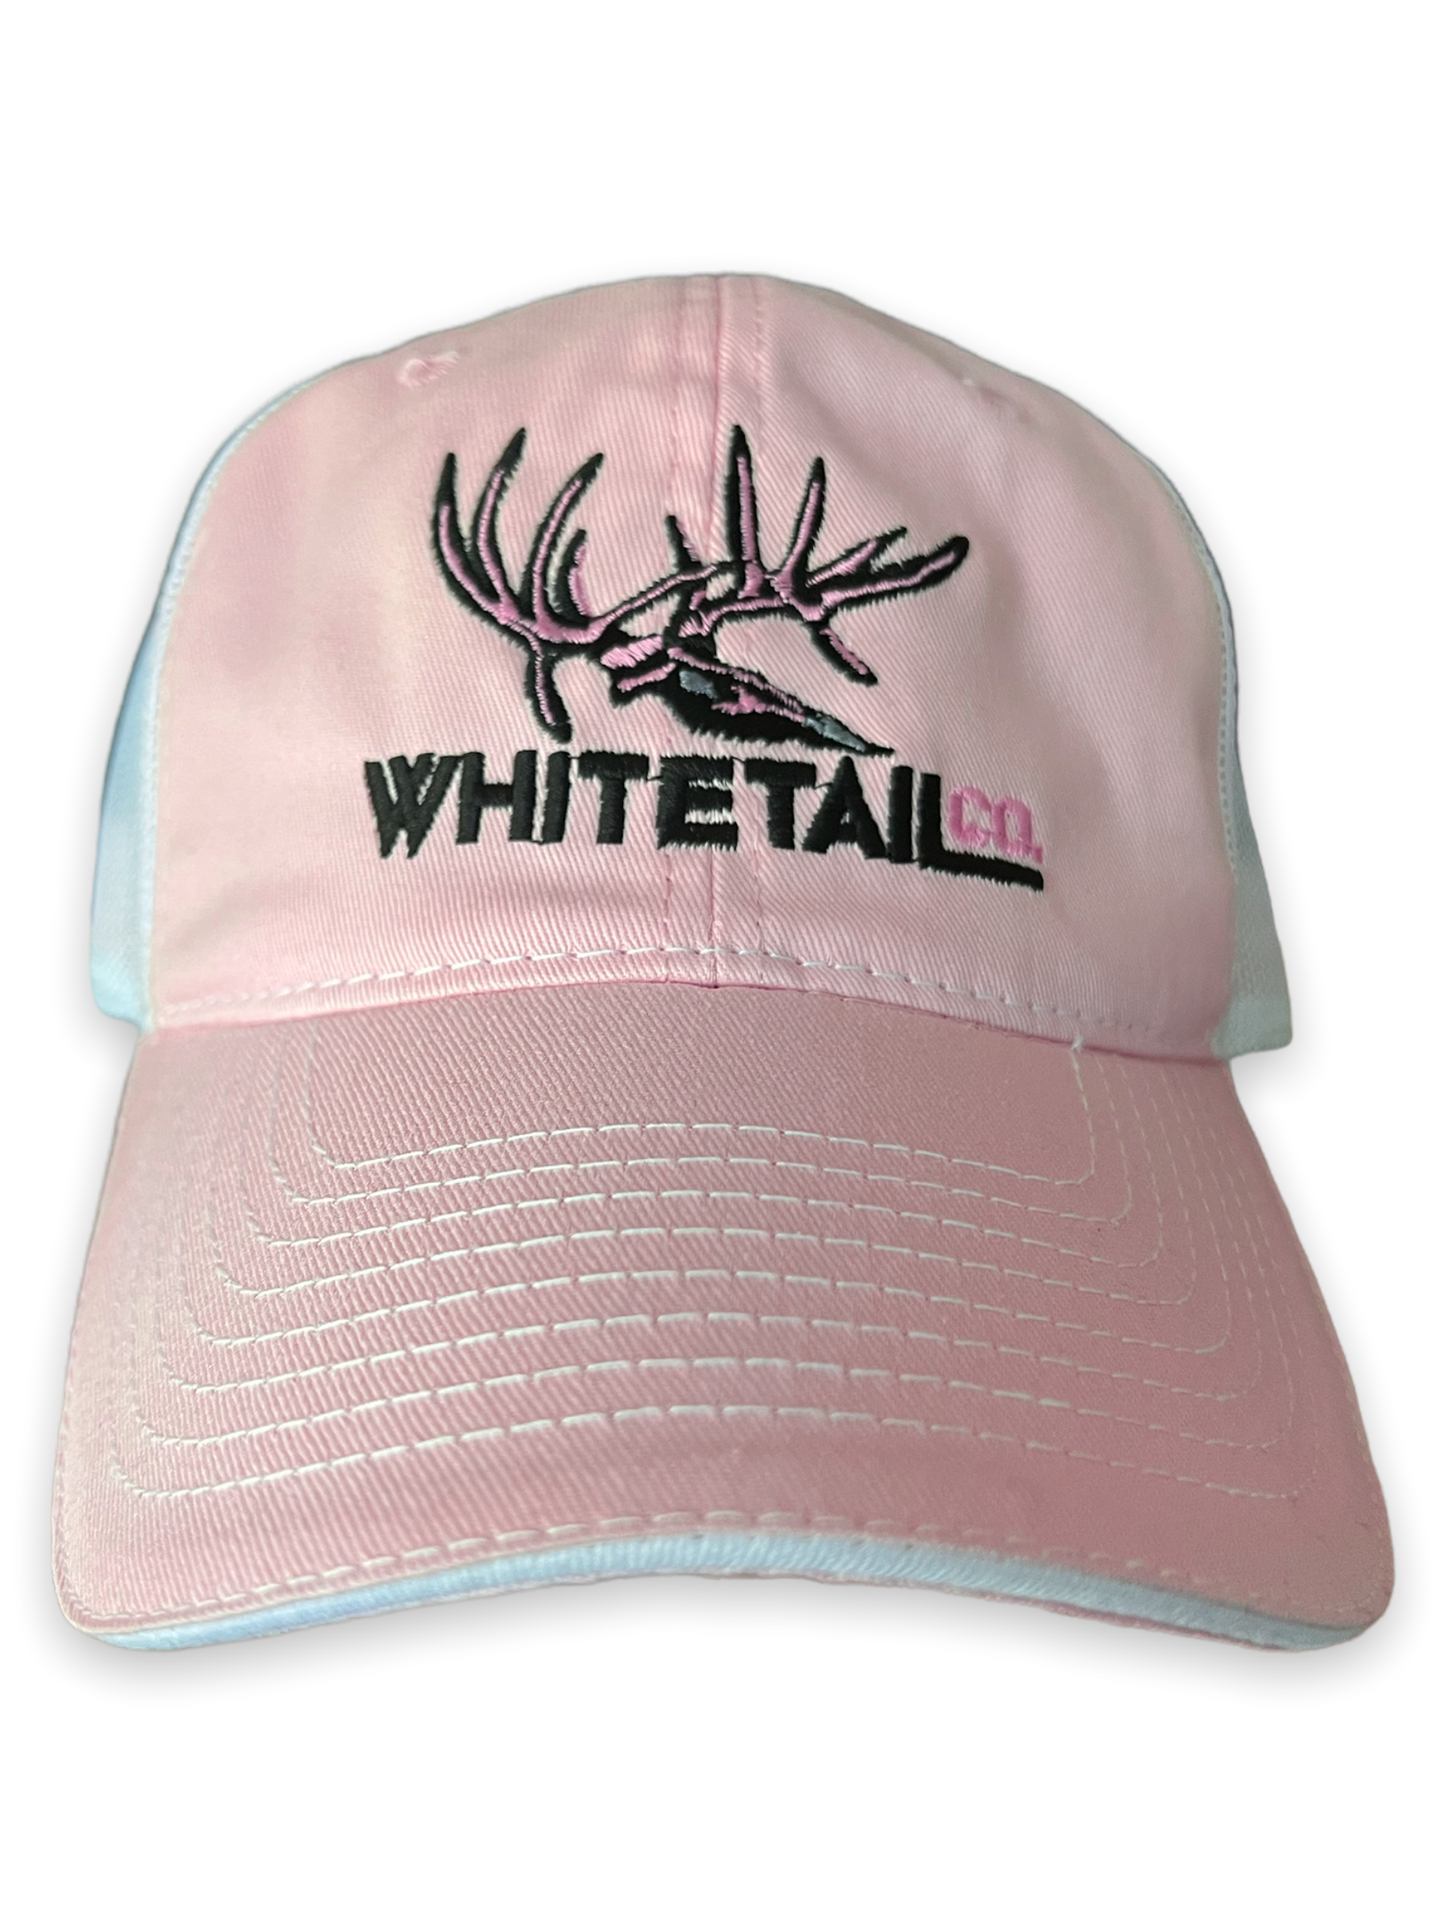 Whitetail Co. Pink/White Hat